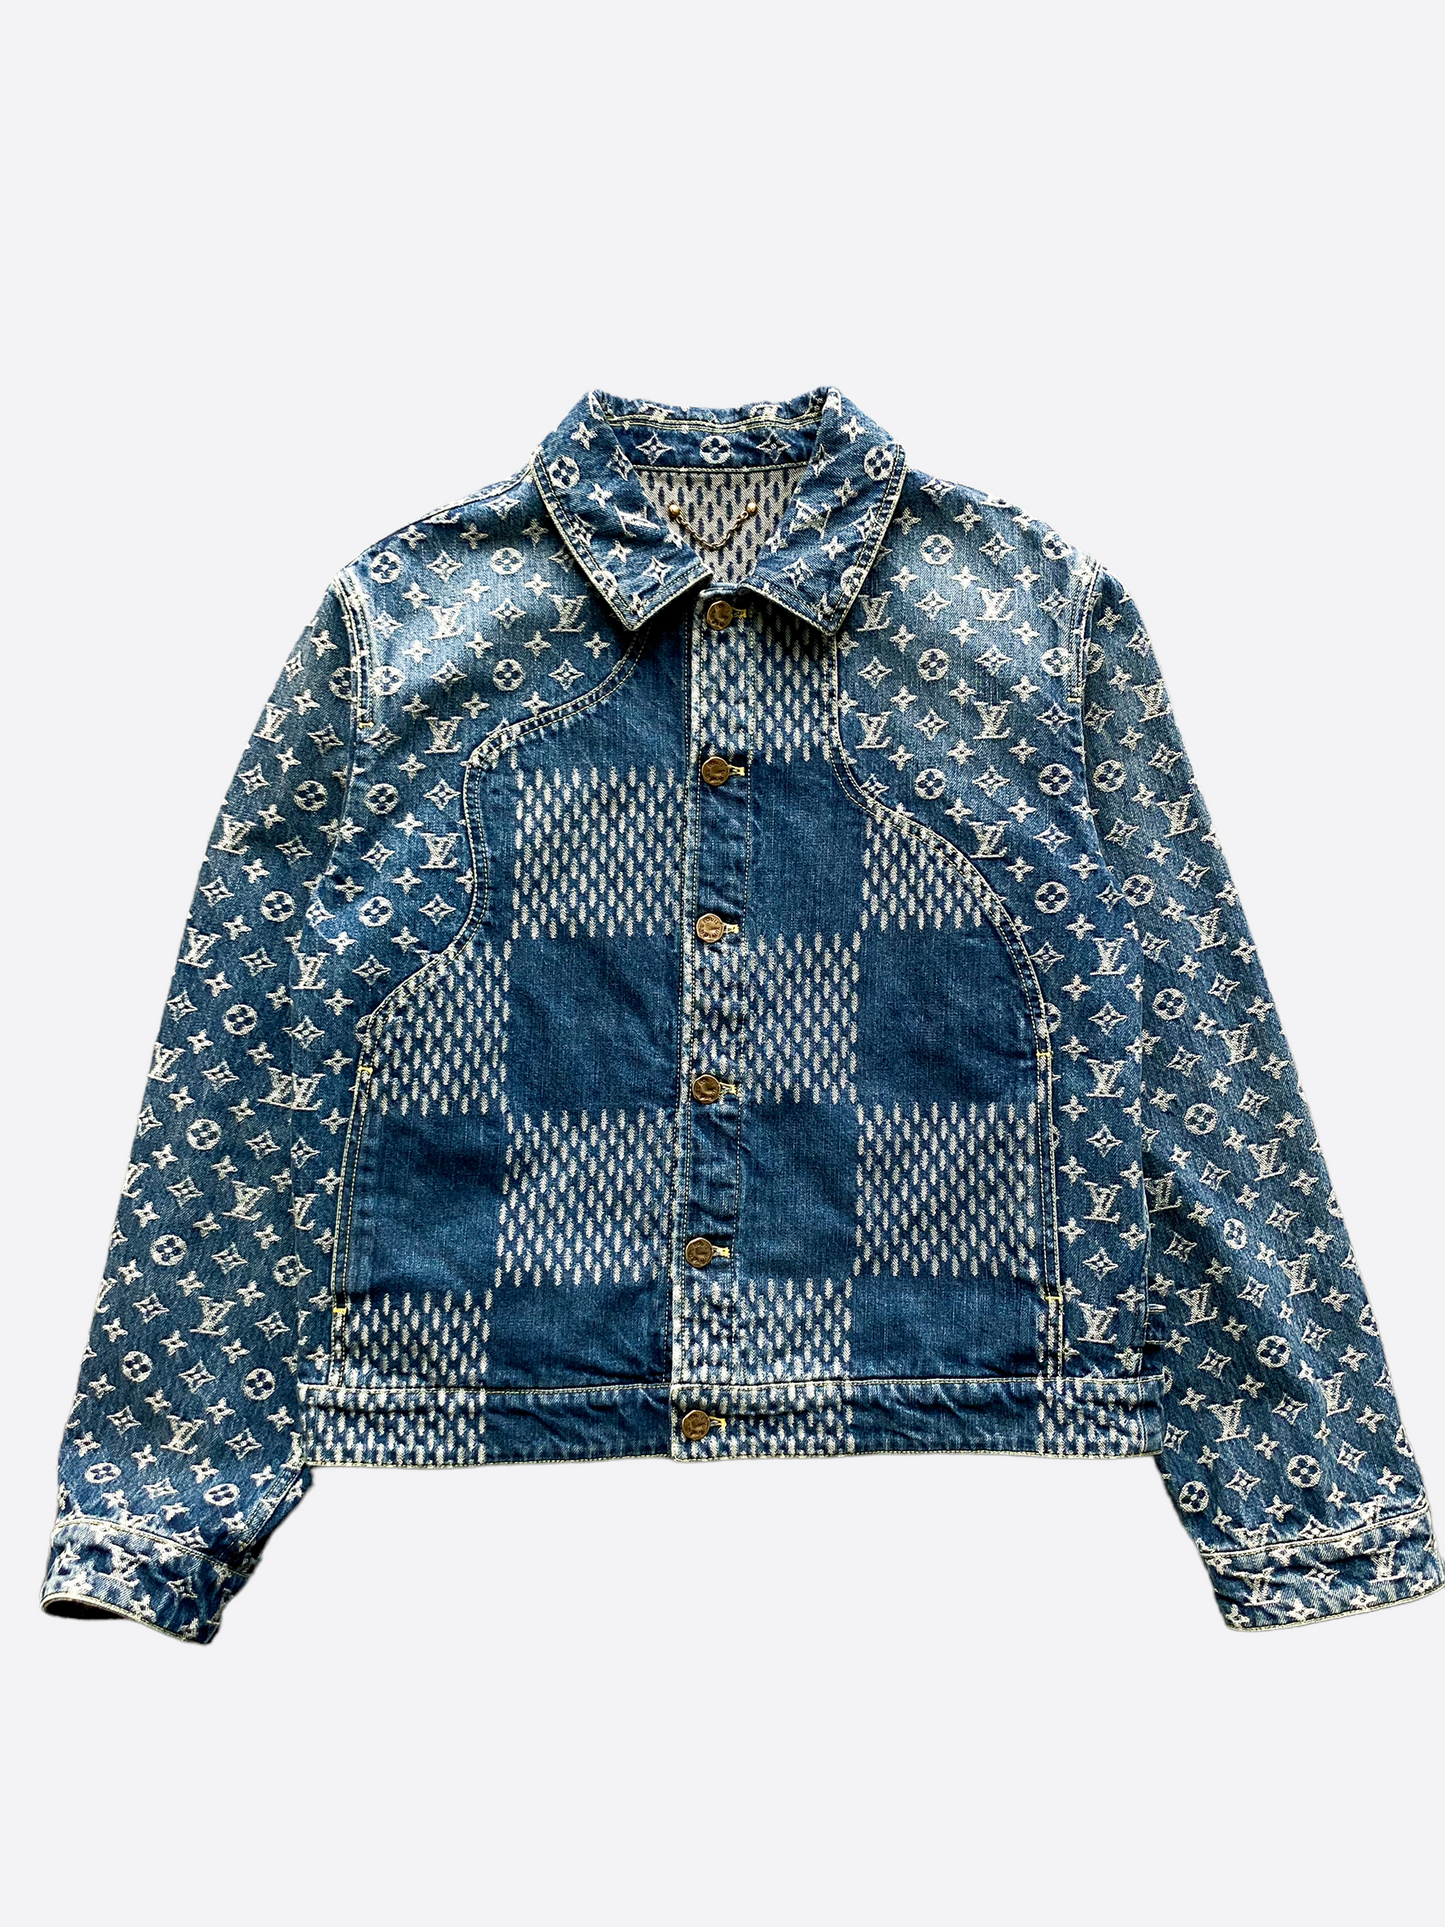 Louis Vuitton x Nigo denim jacket, Men's Fashion, Coats, Jackets